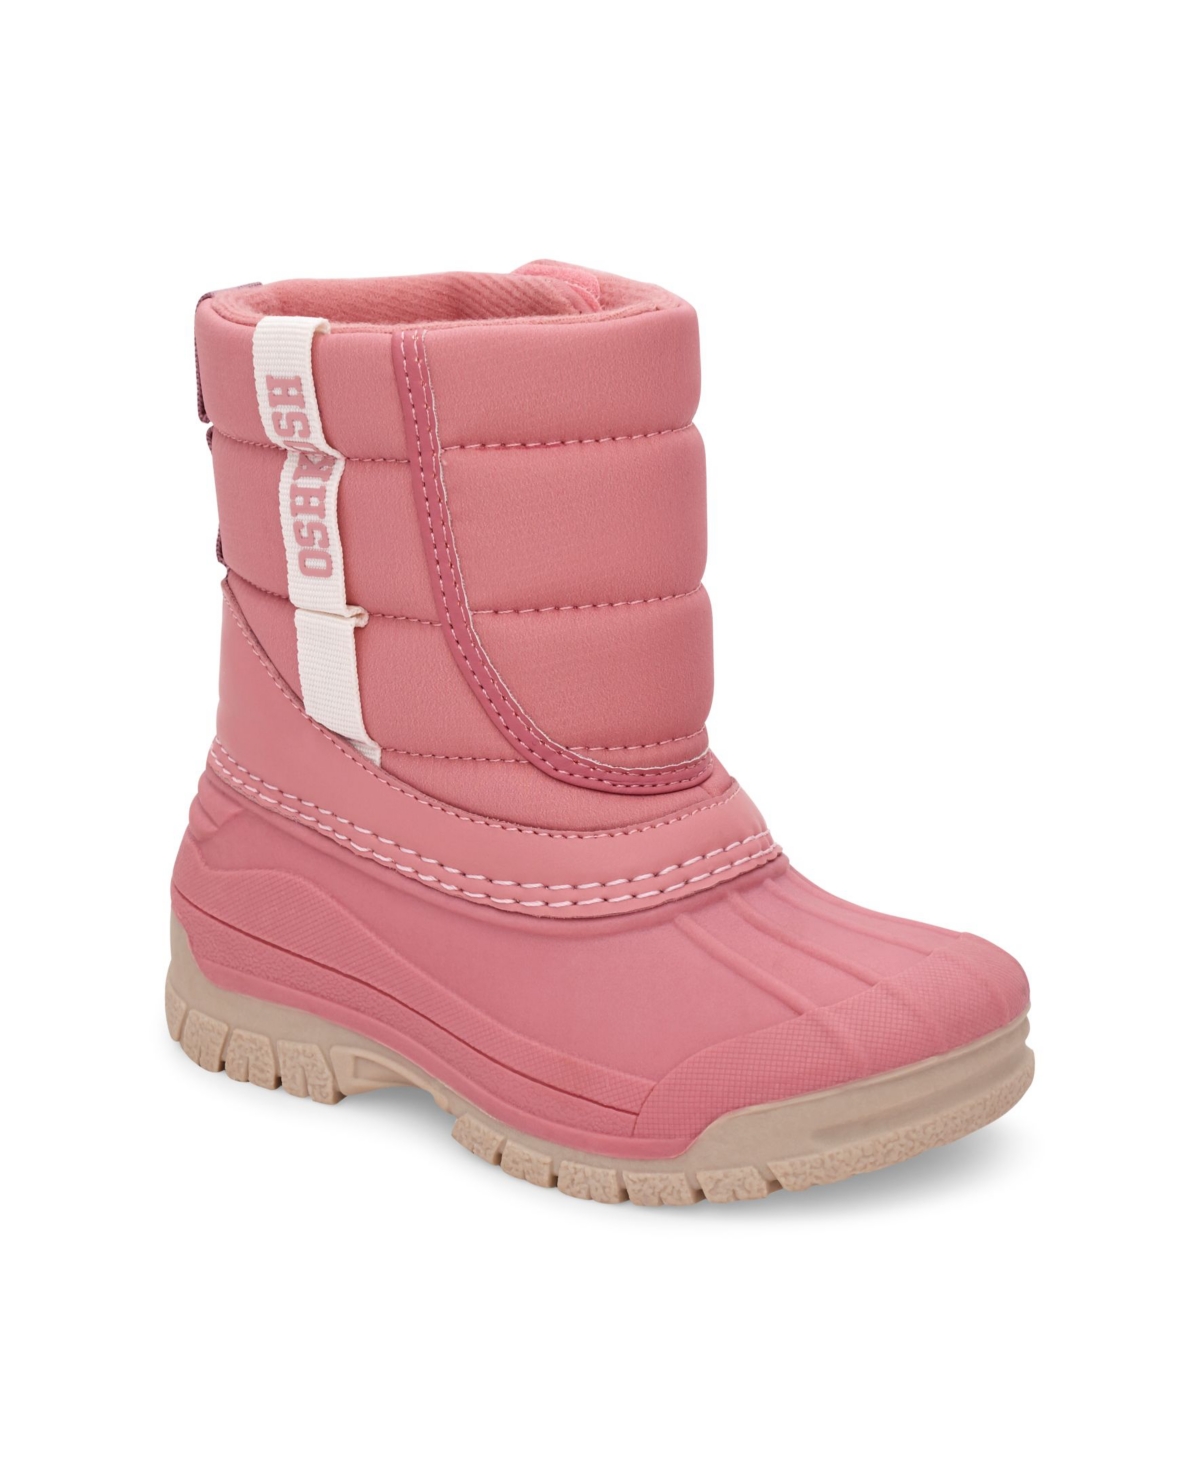 Oshkosh B'gosh Toddler Girls Splash Boots In Pink